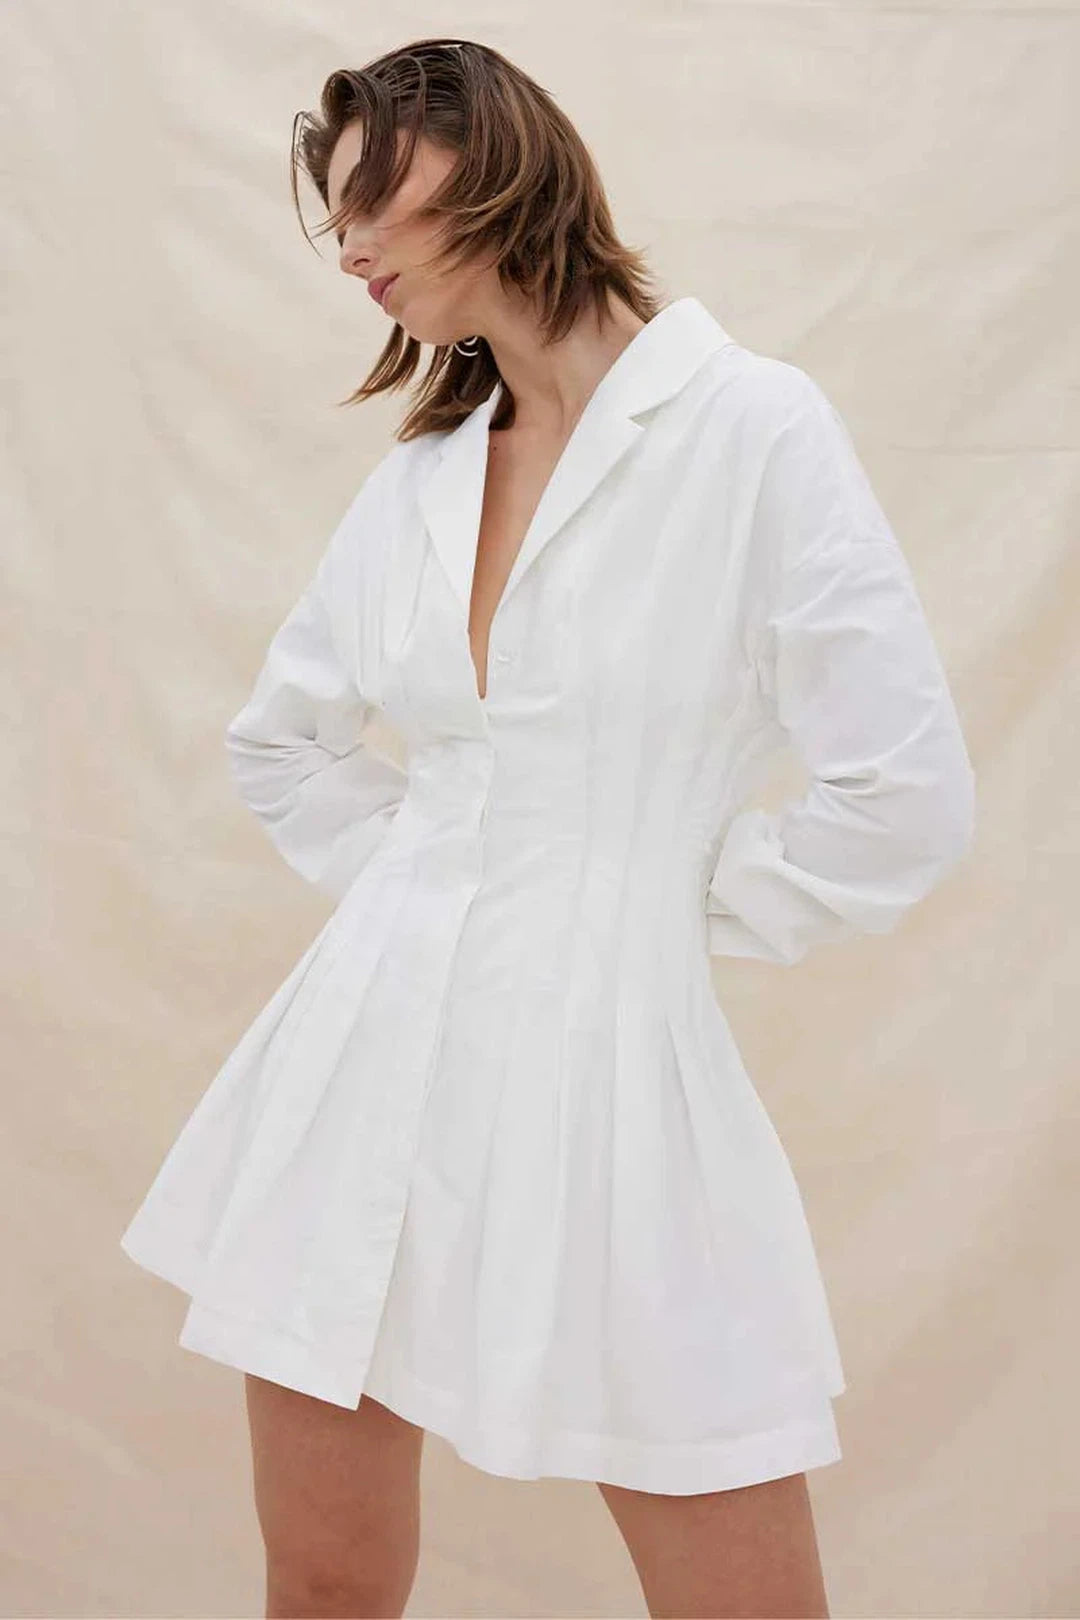 Verse shirt dress, white